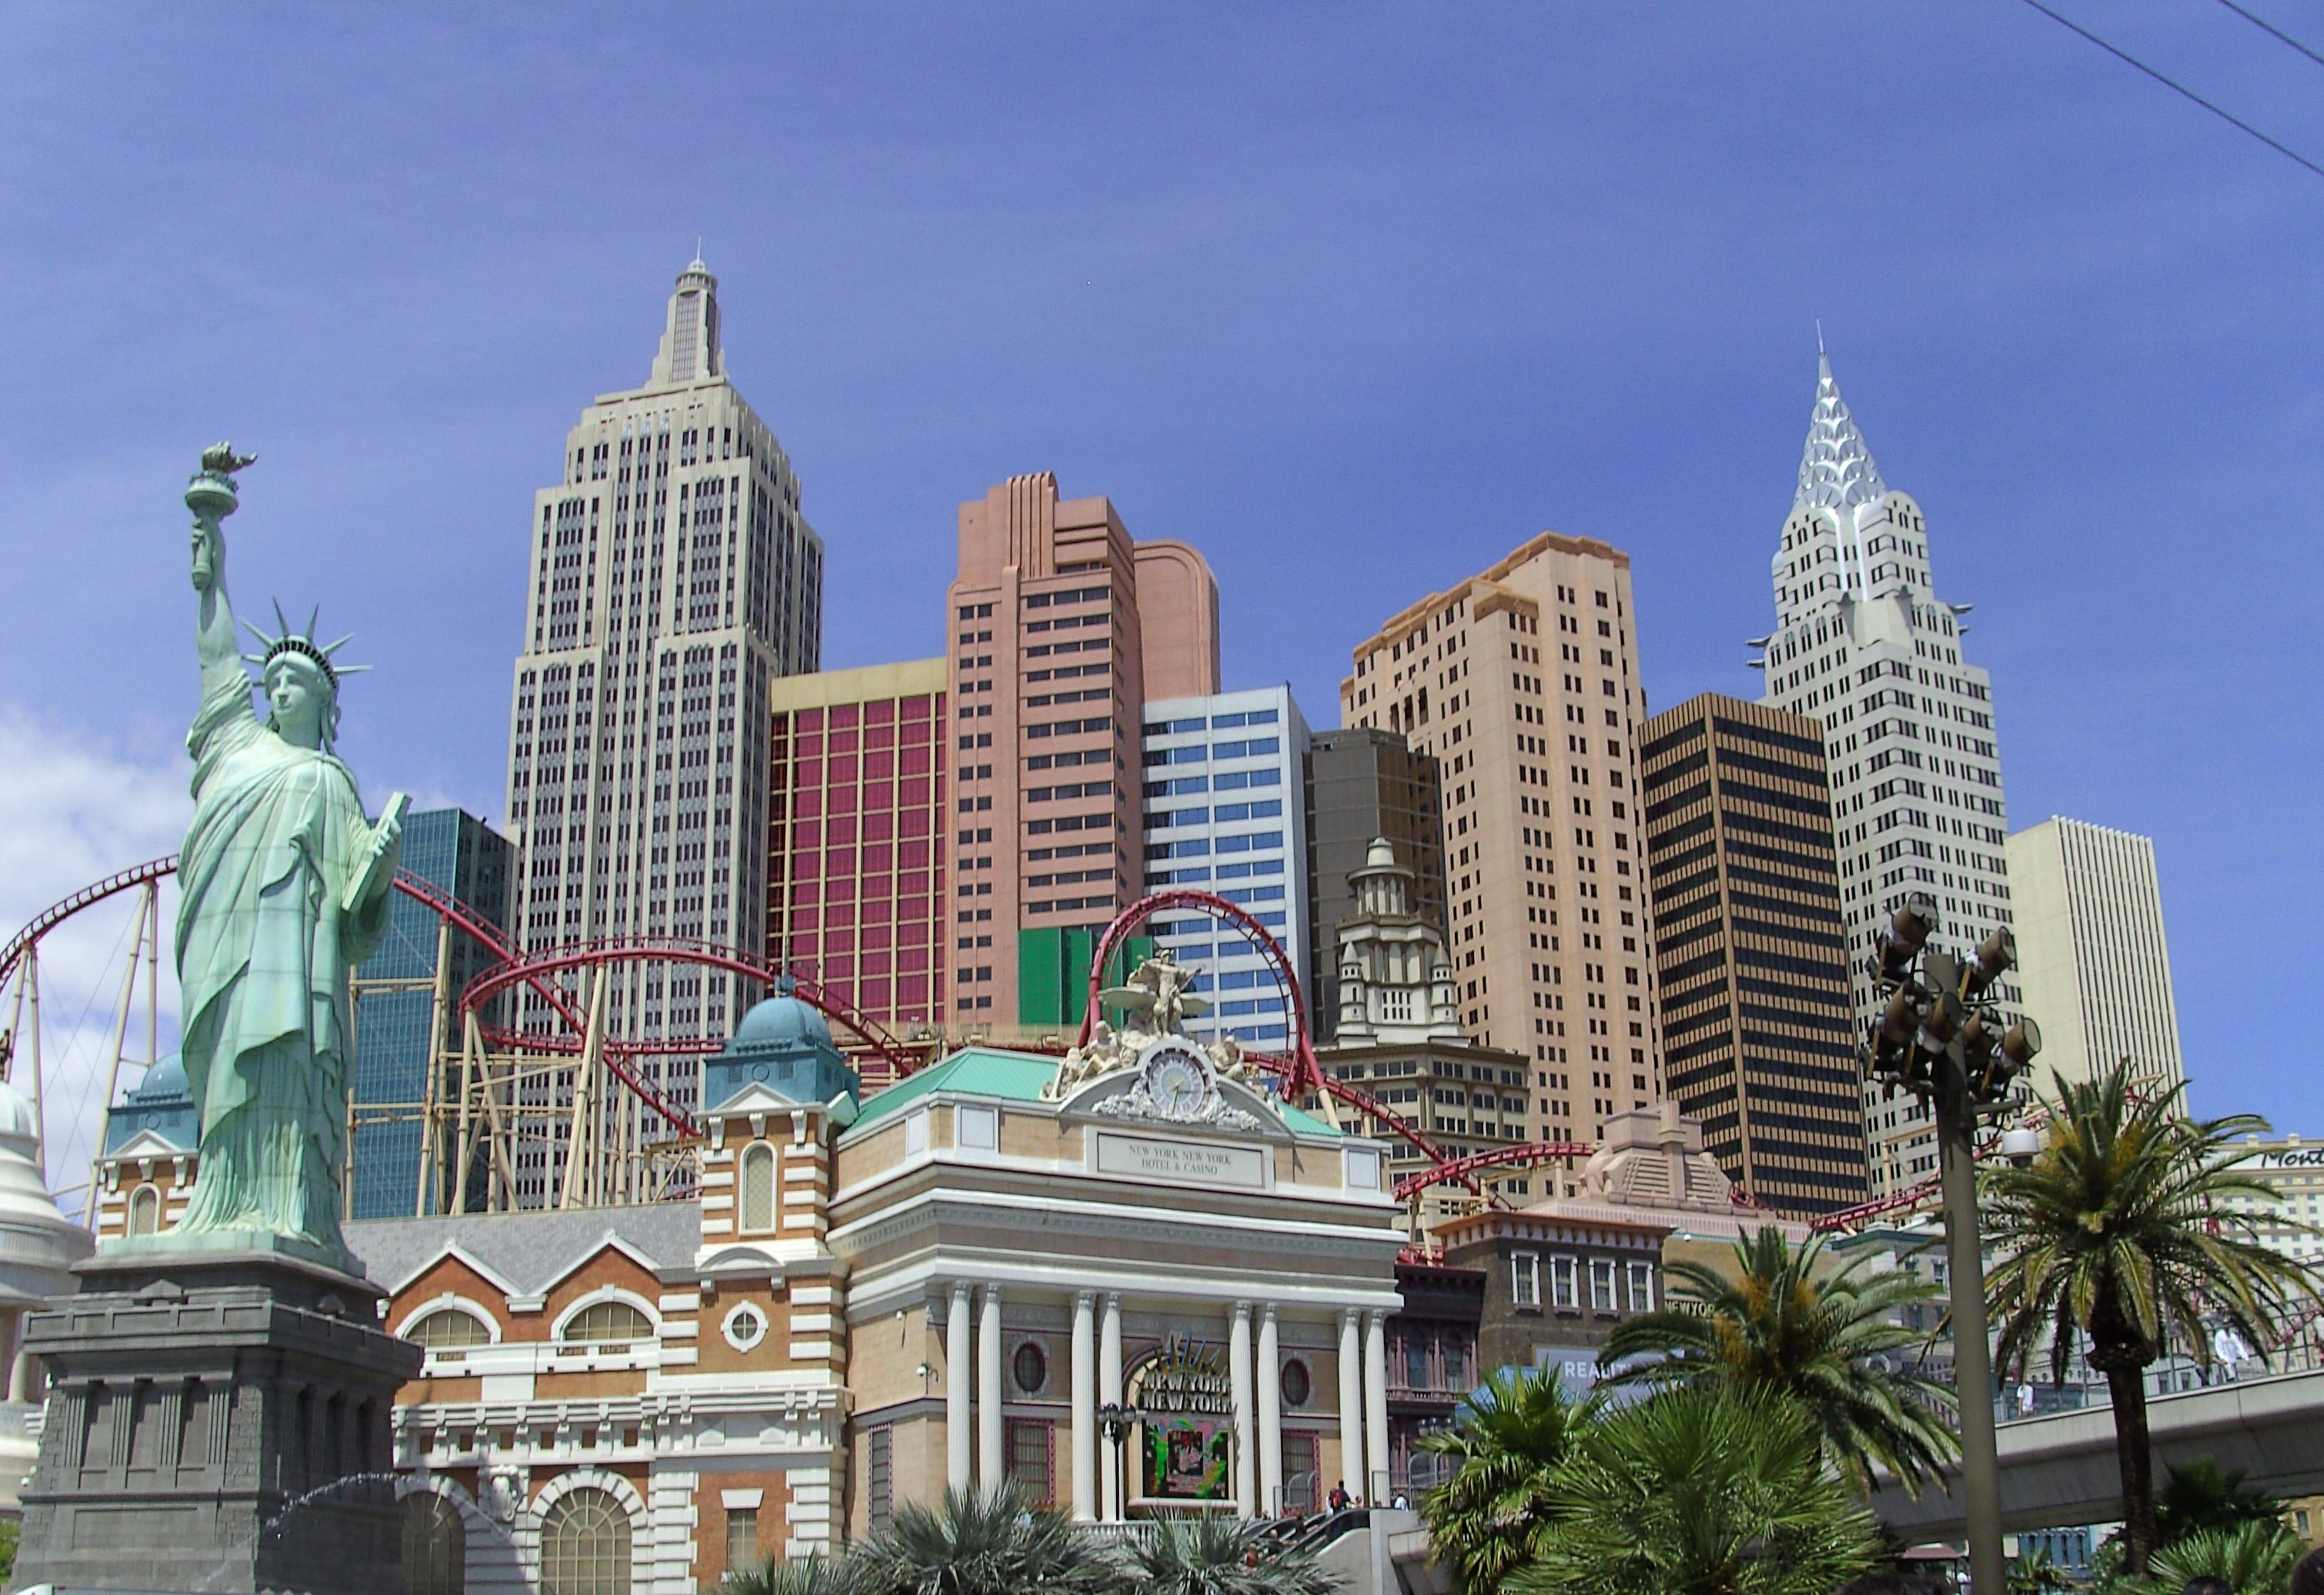 File:New York, New York hotel & casino in Las Vegas.jpg - Wikimedia Commons